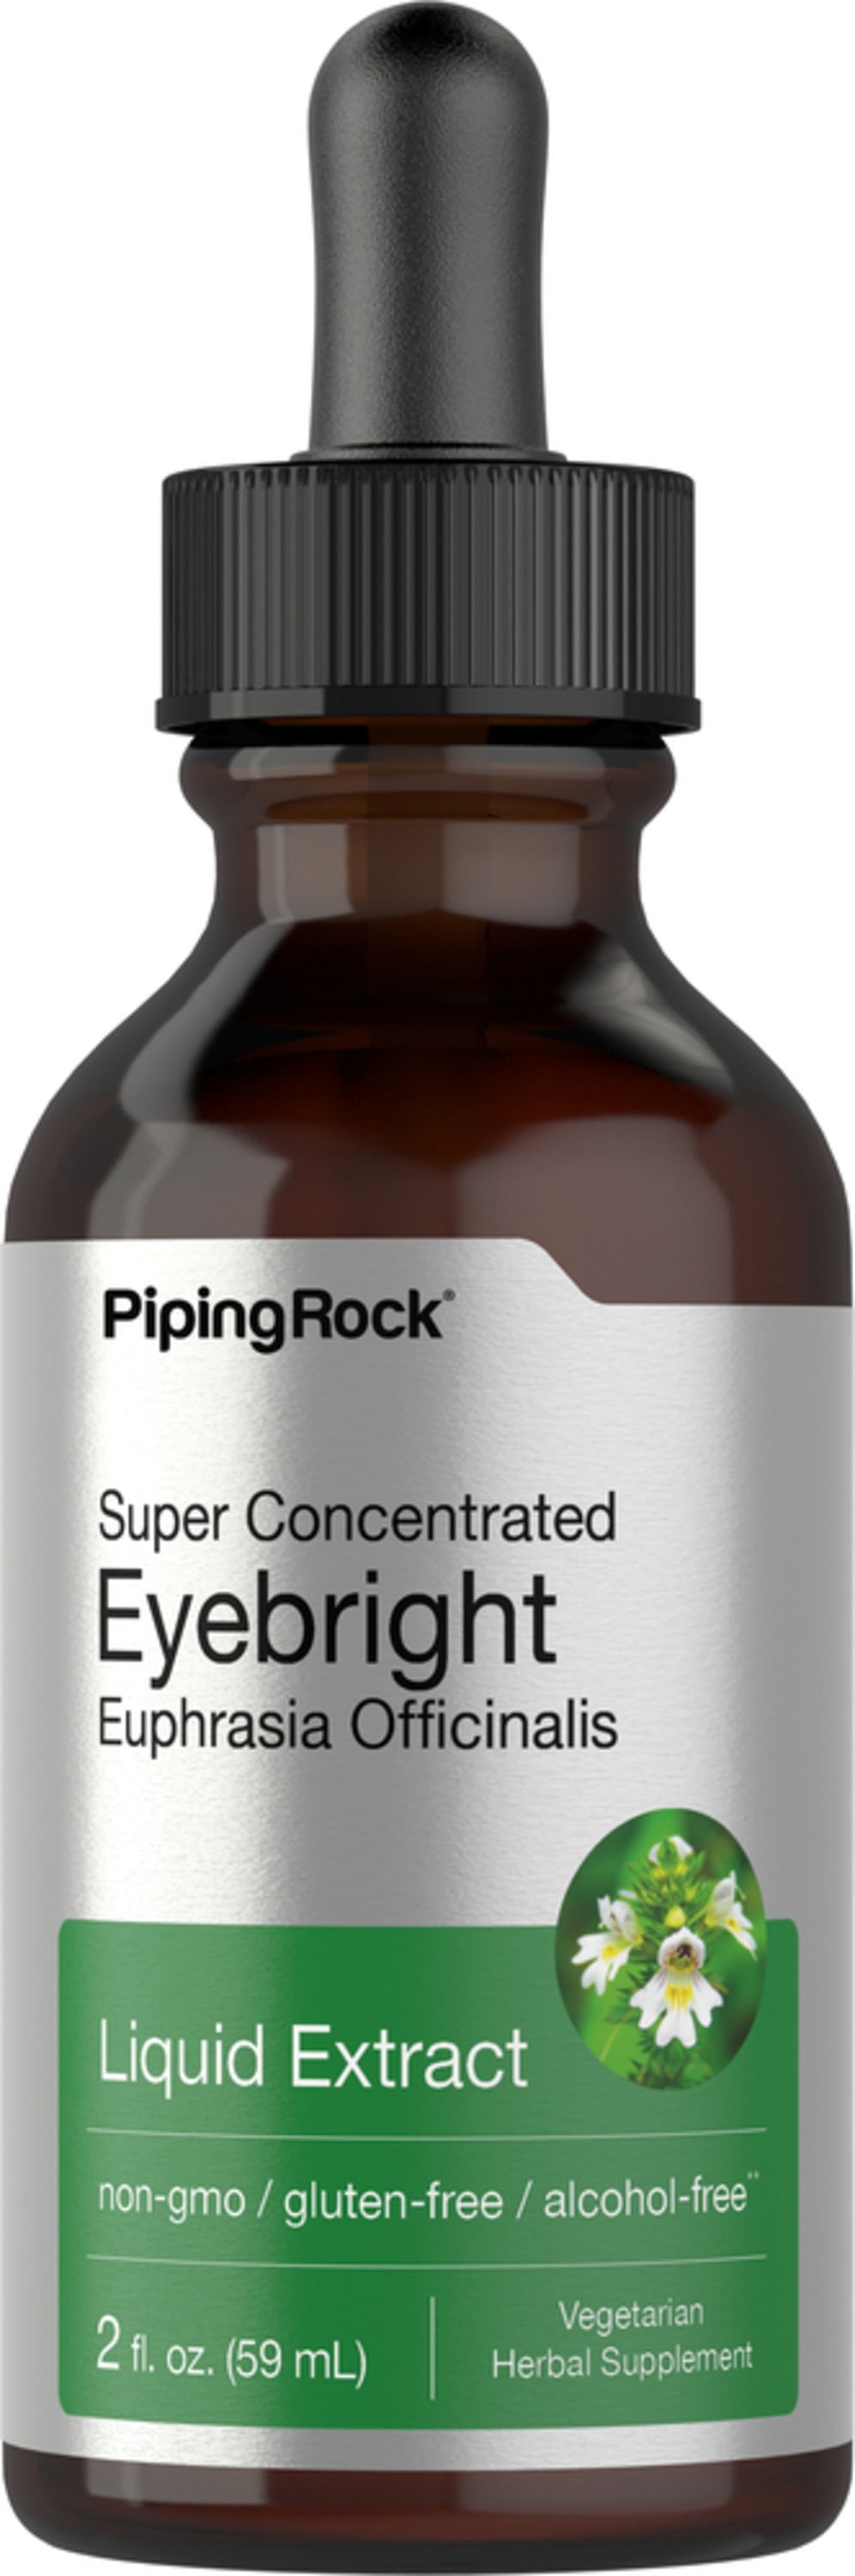 Eyebright Liquid Extract Alcohol Free, 2 fl oz (59 mL) Dropper Bottle